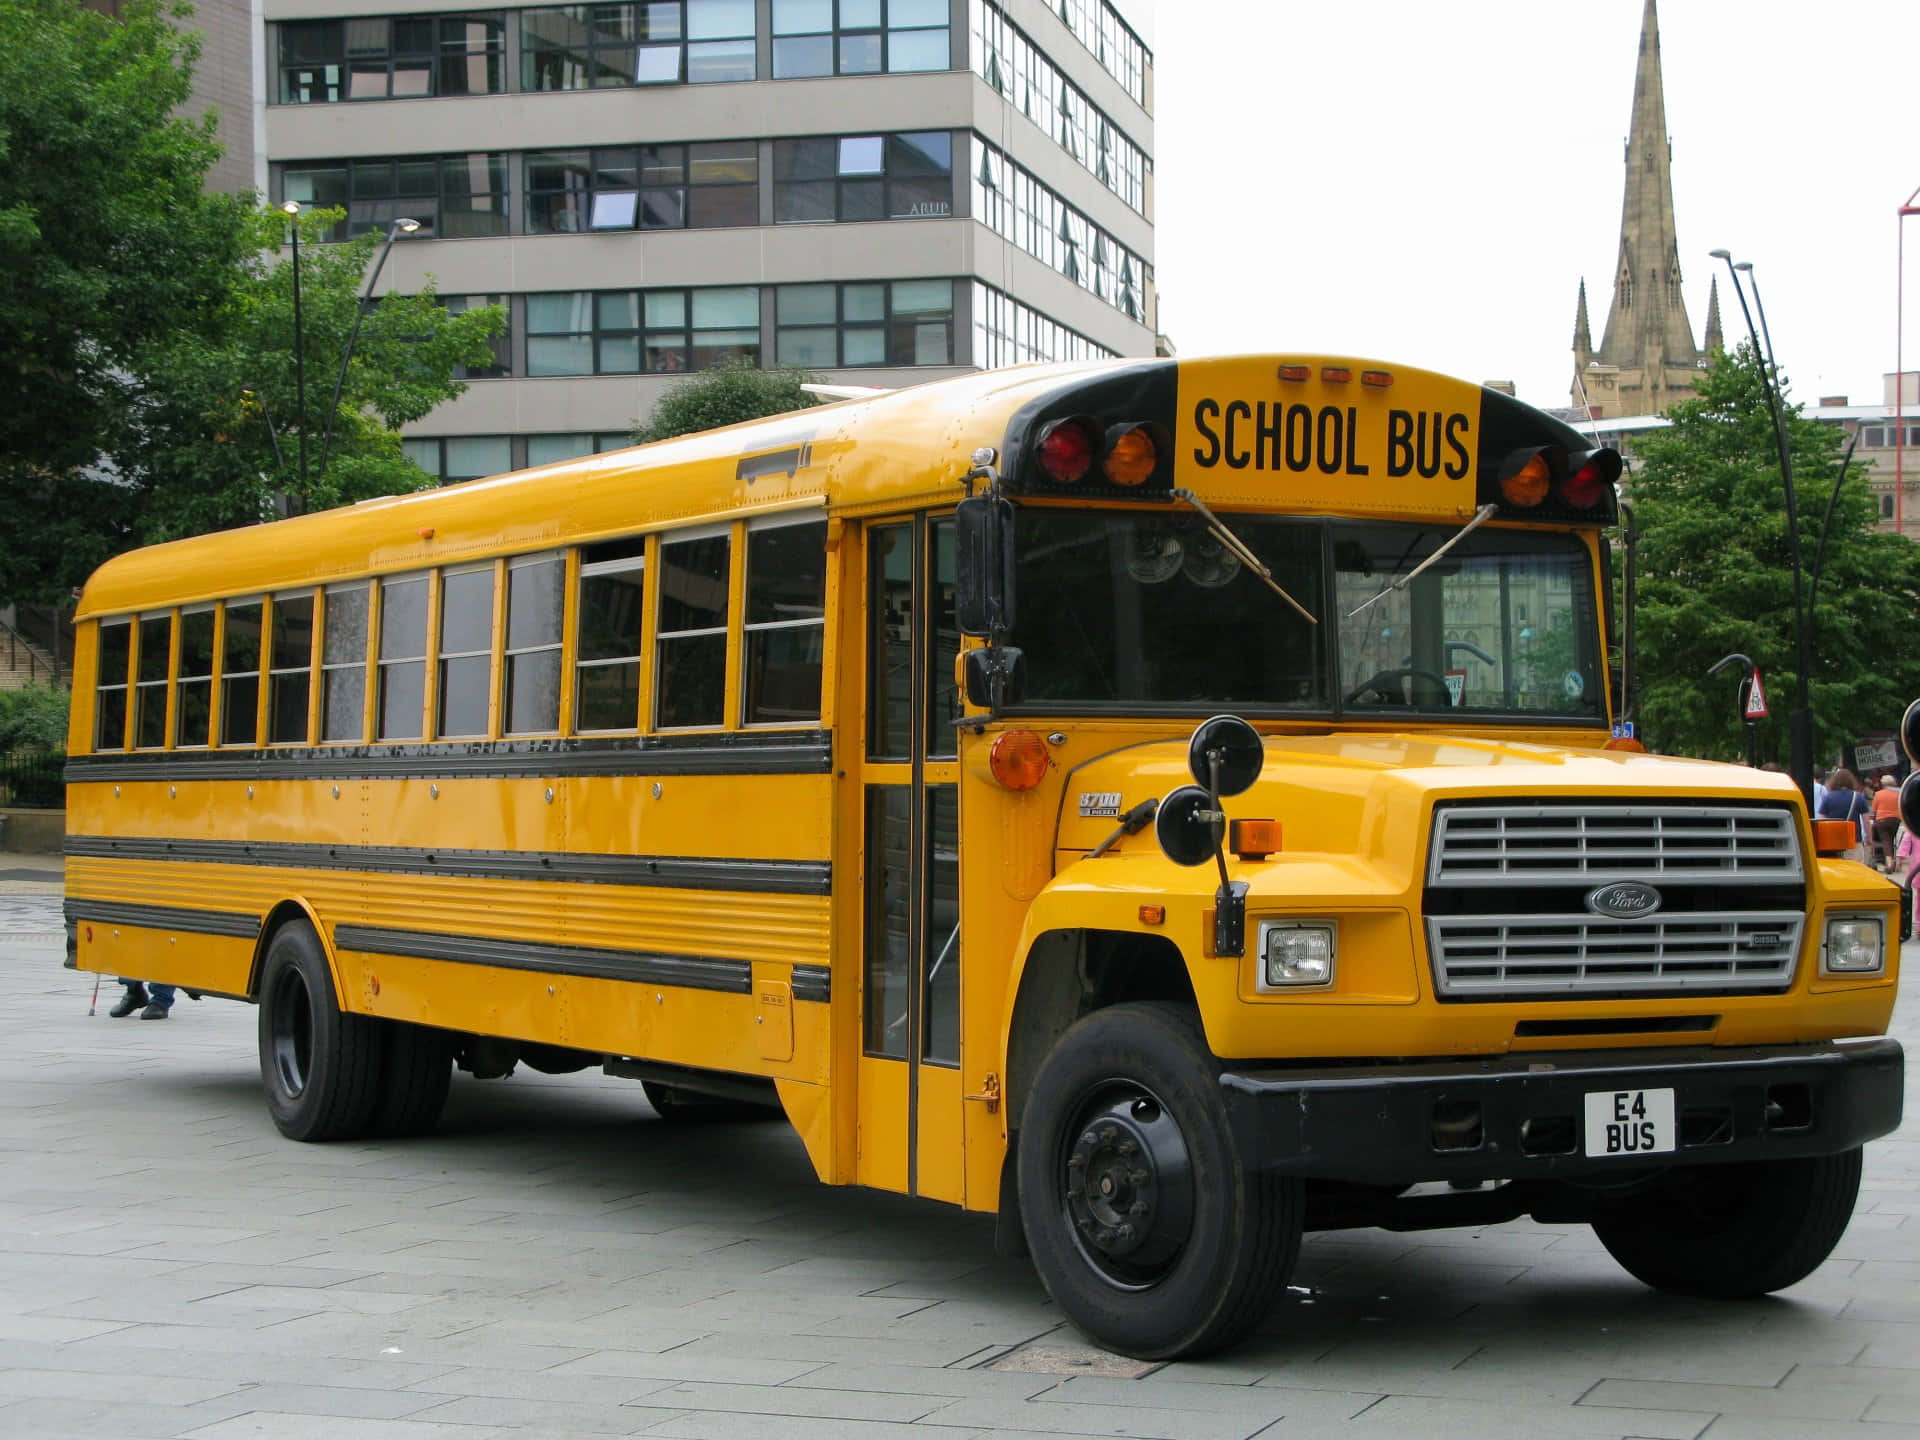 School Bus In The School Campus Background